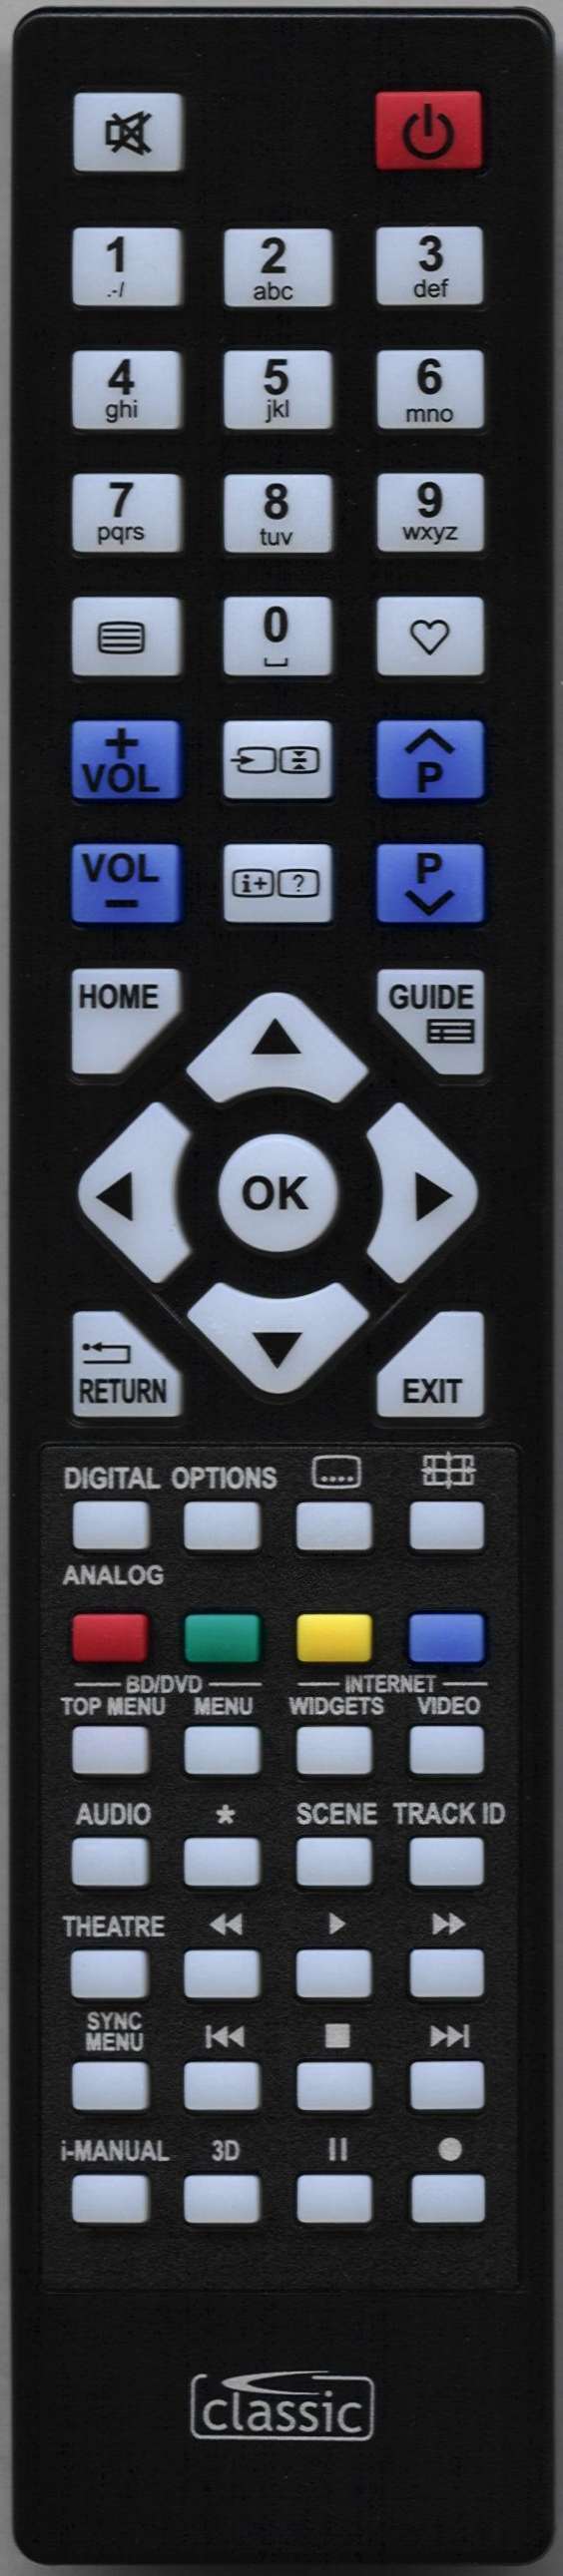 SONY KDL40EX403 Remote Control